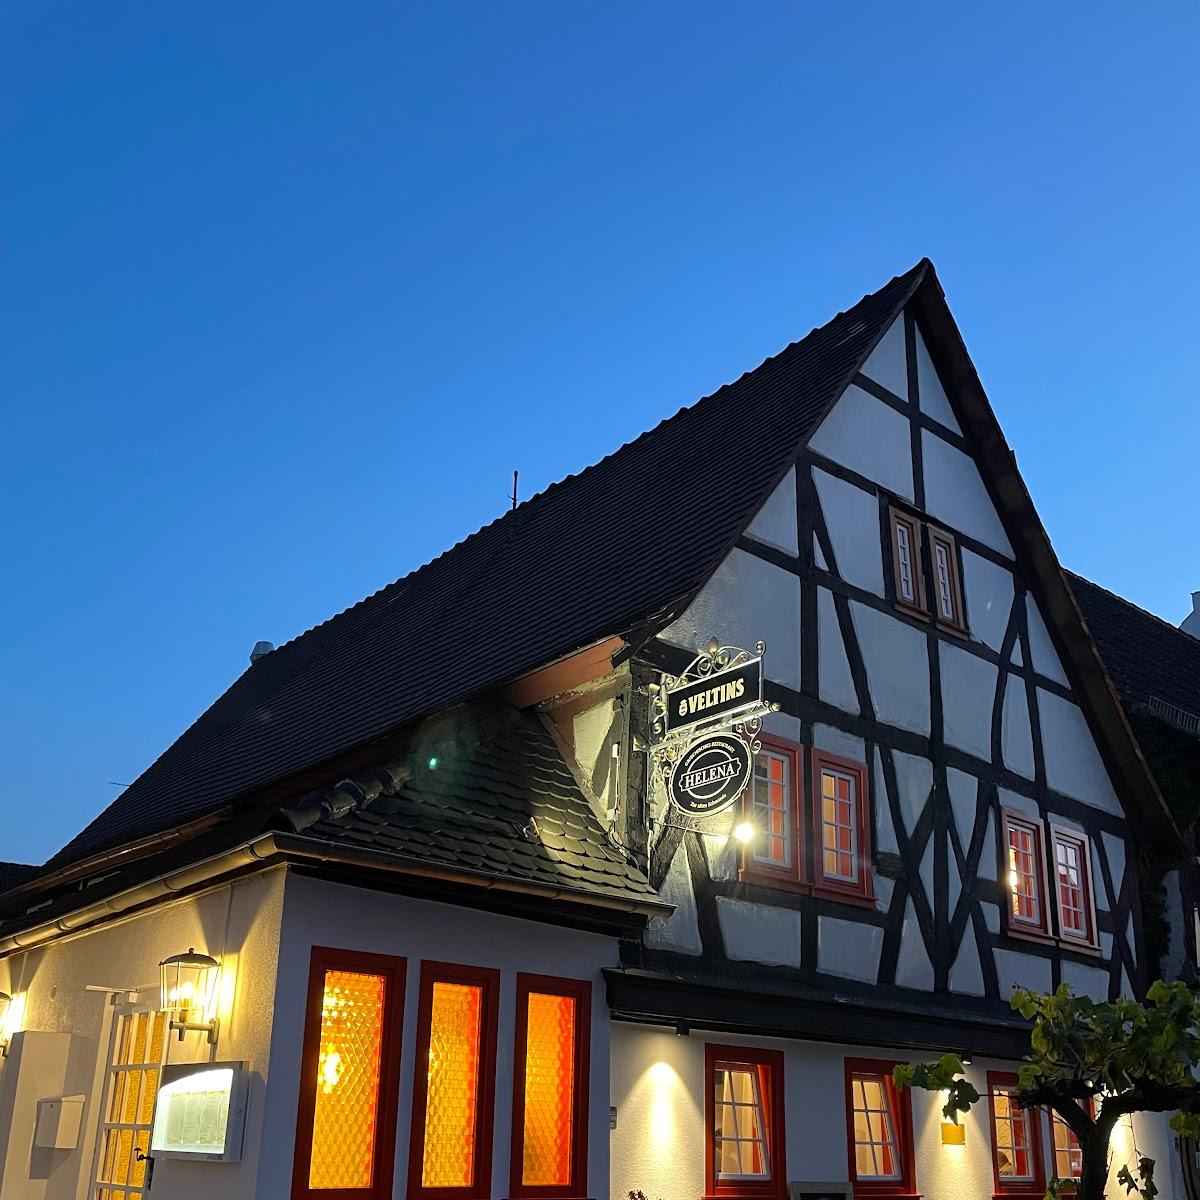 Restaurant "Restaurant Helena" in Groß-Gerau